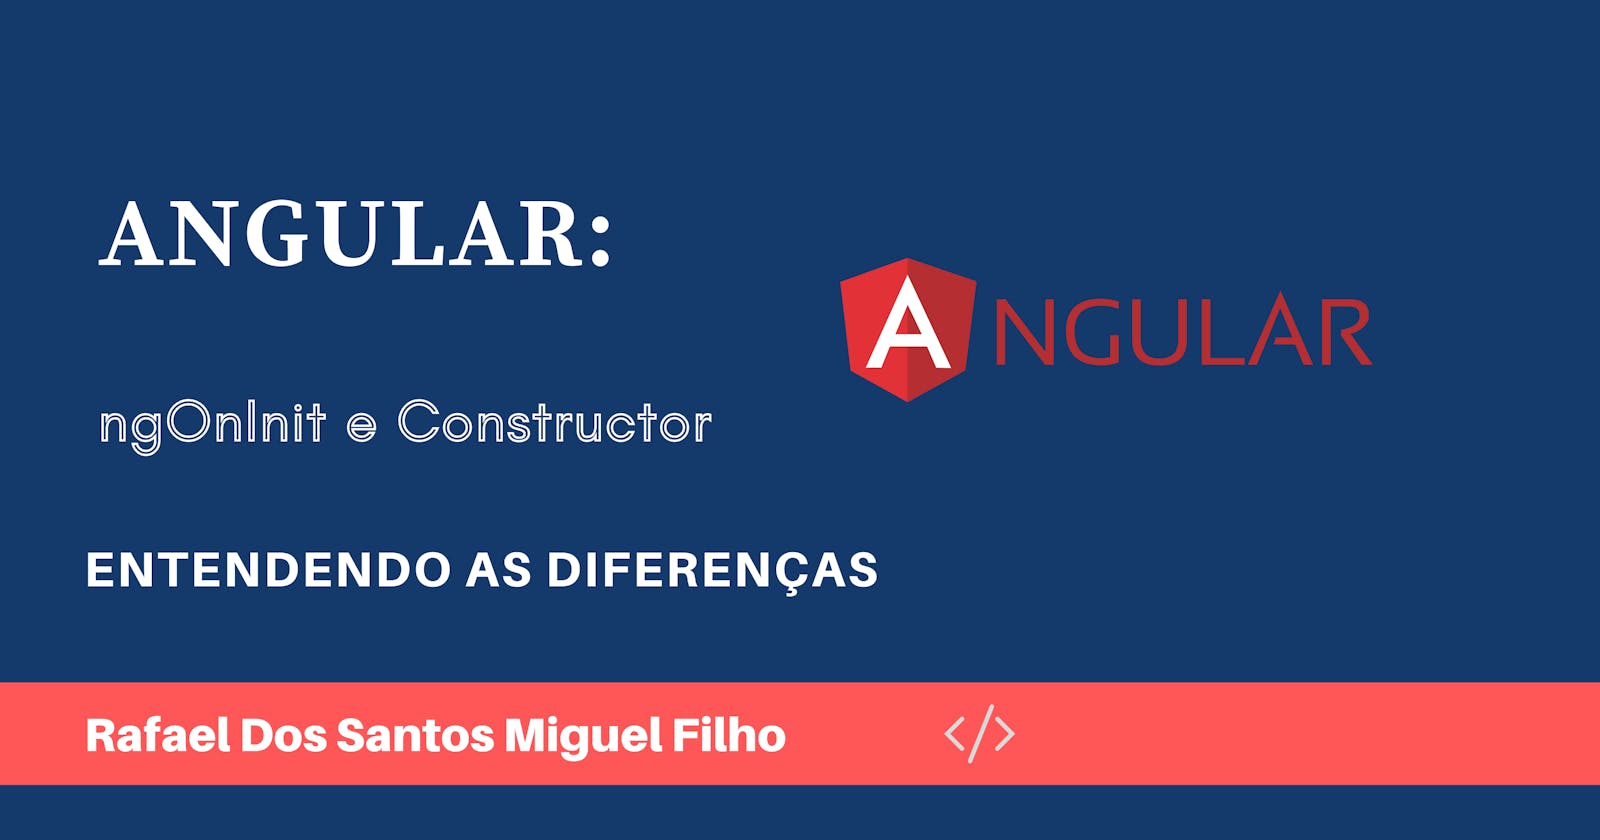 Angular: ngOnInit e Constructor.